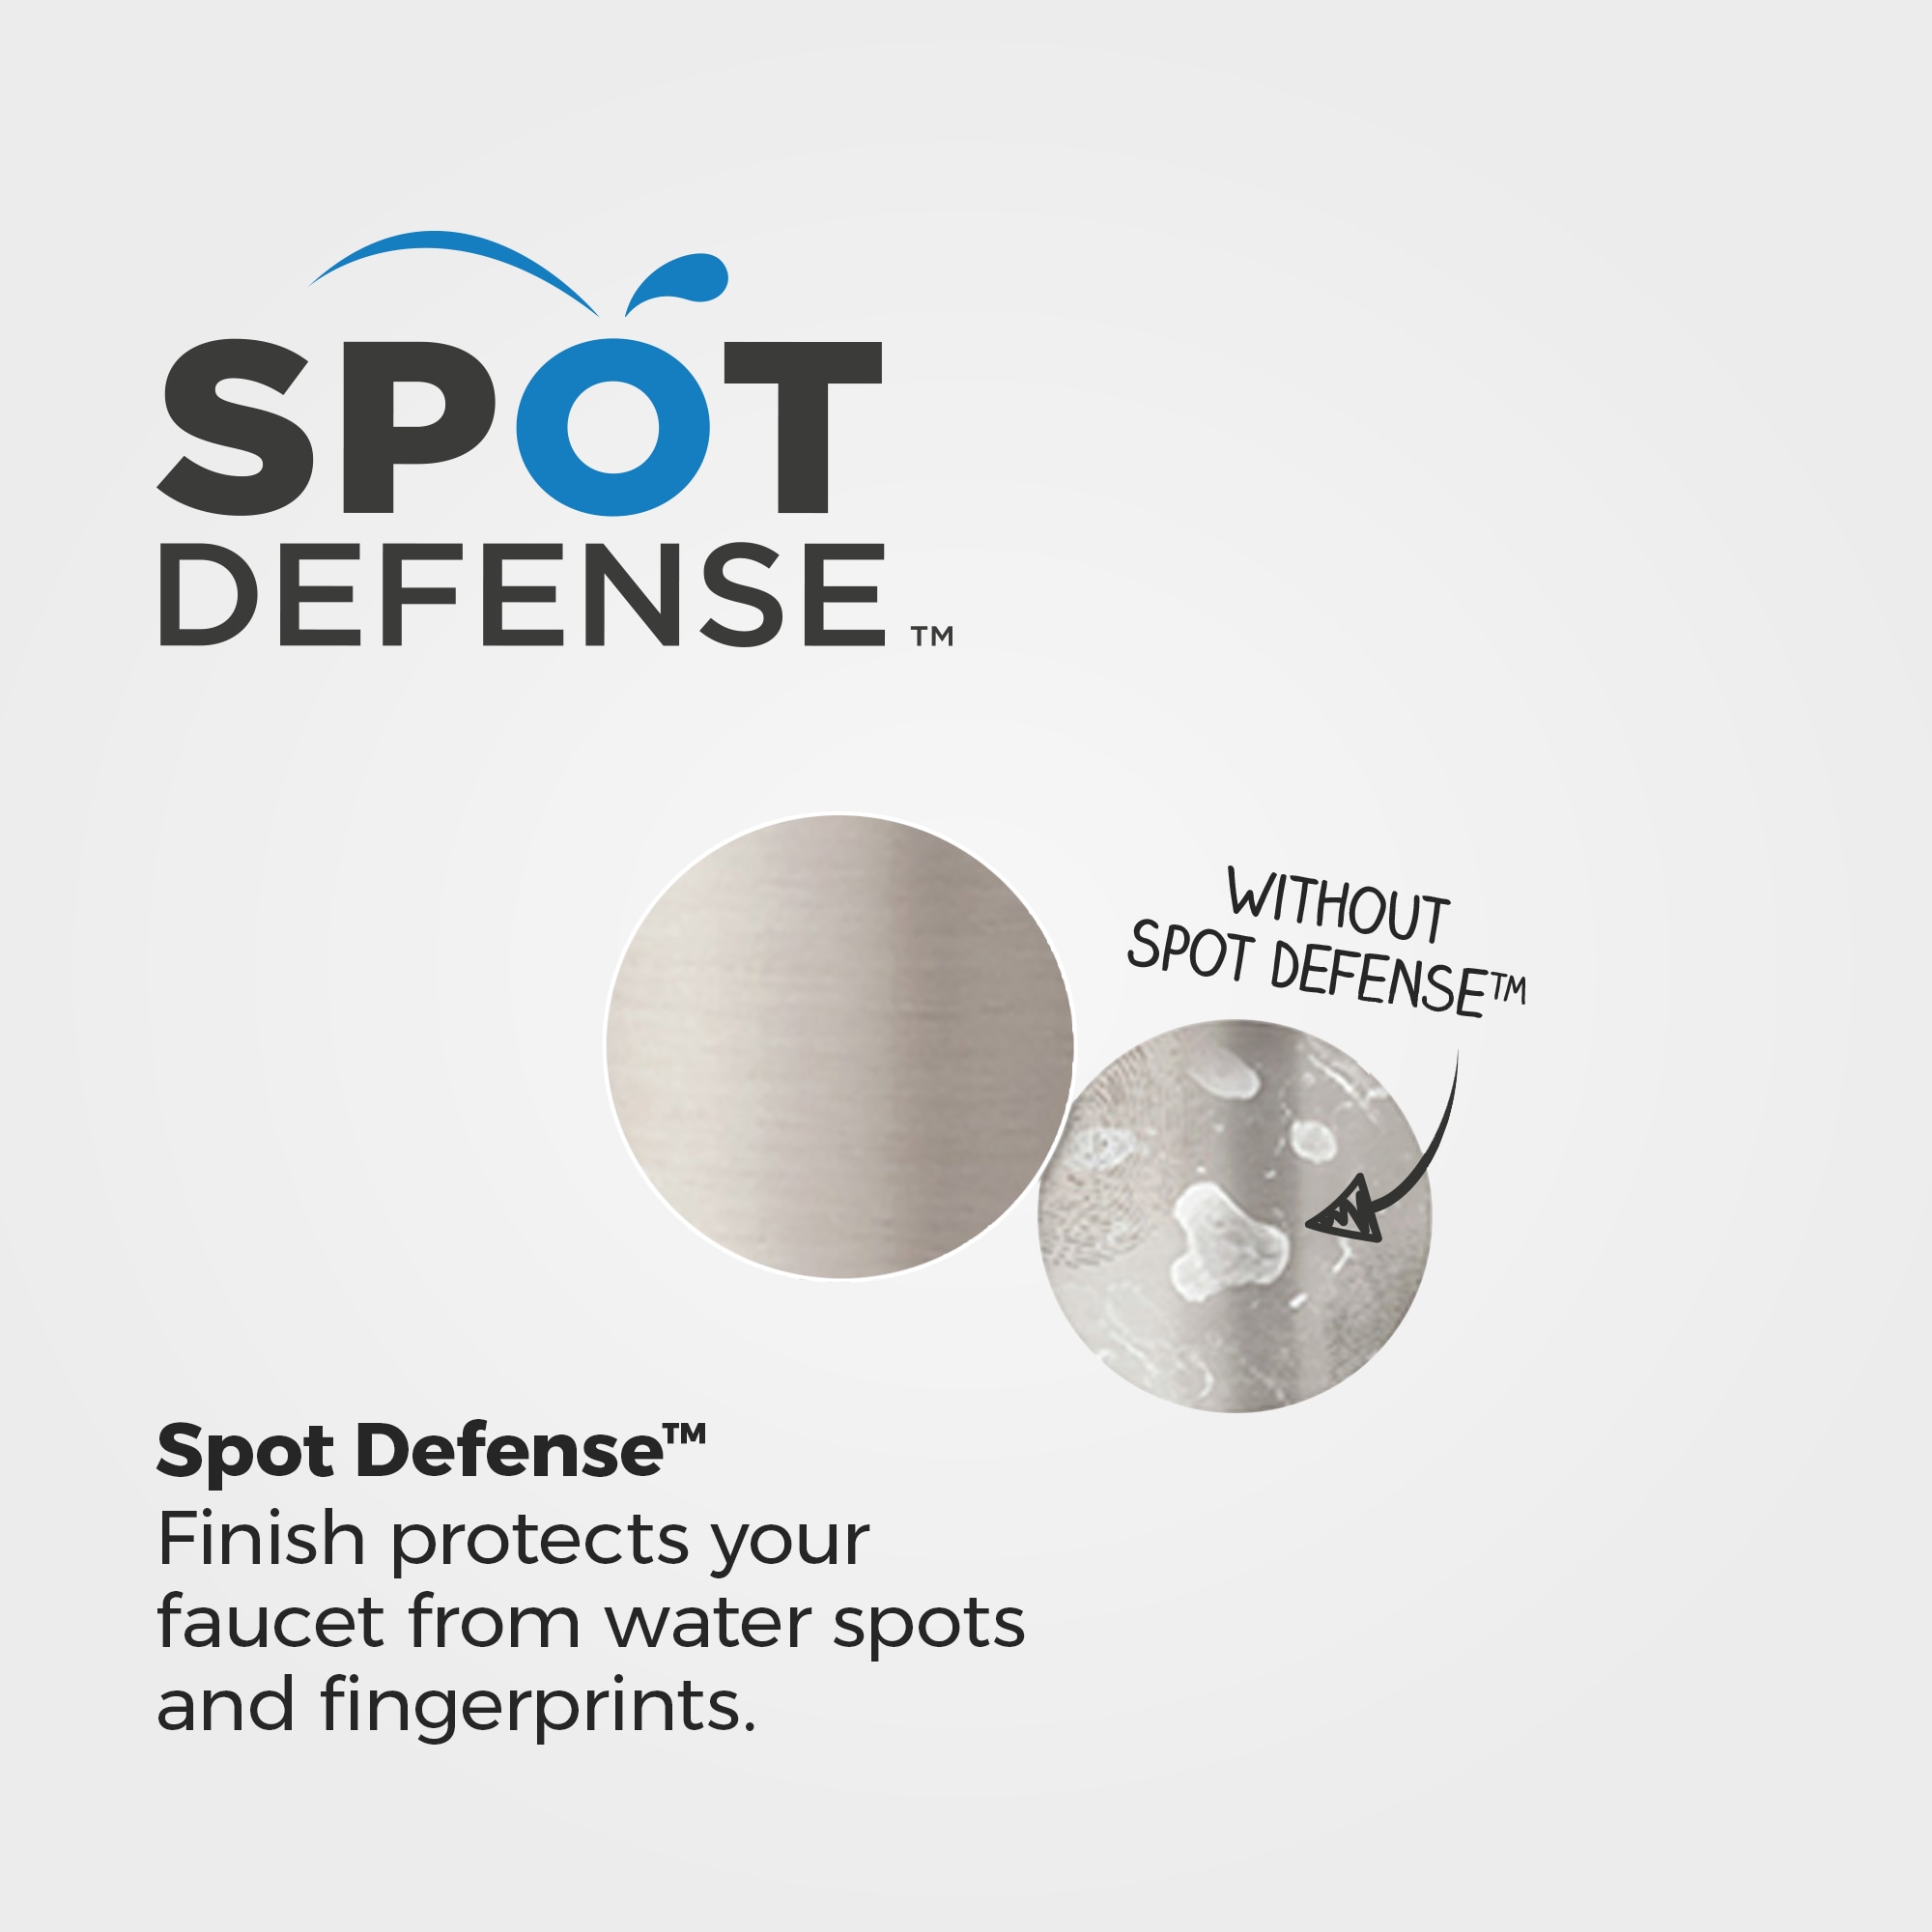 Spot Defense Brushed Nickel Vaneri BPH-VRI0GS Toilet Paper Holder